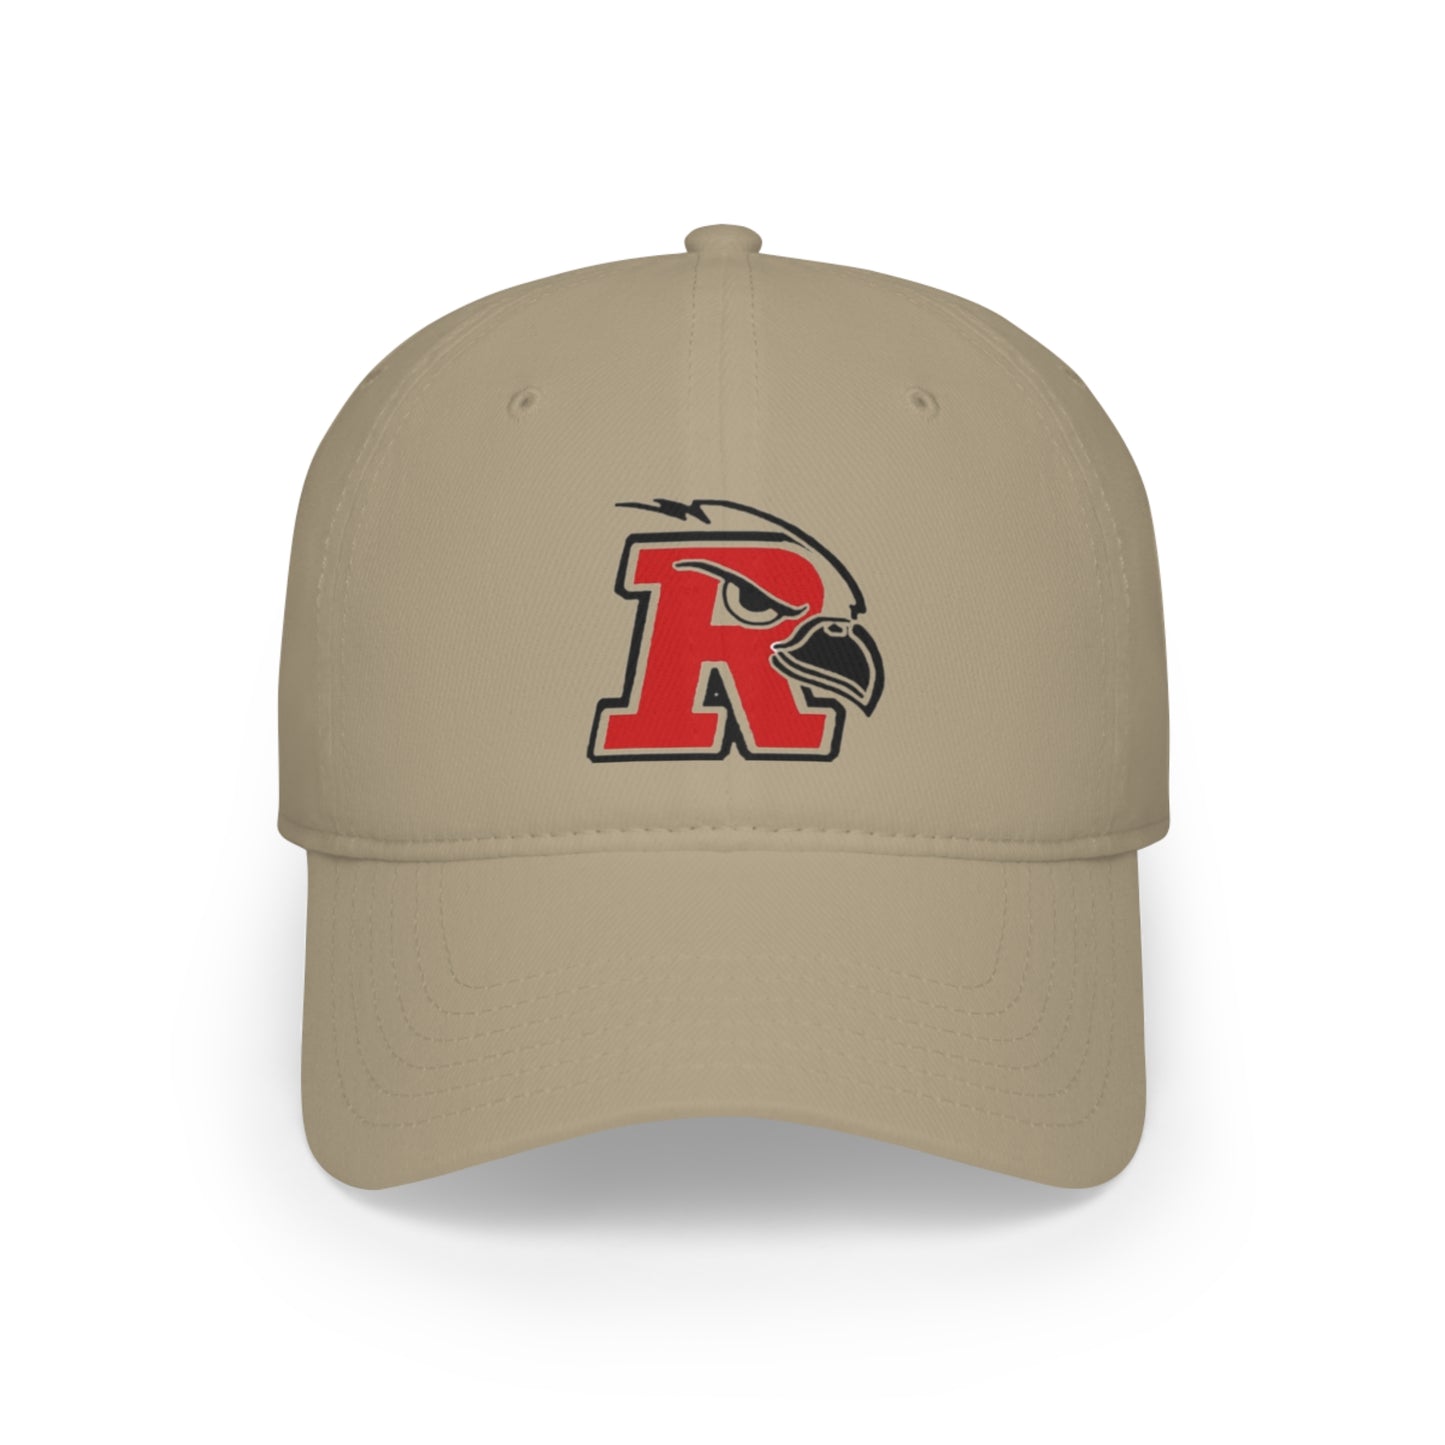 Redondo Union High School / Low Profile Baseball Cap